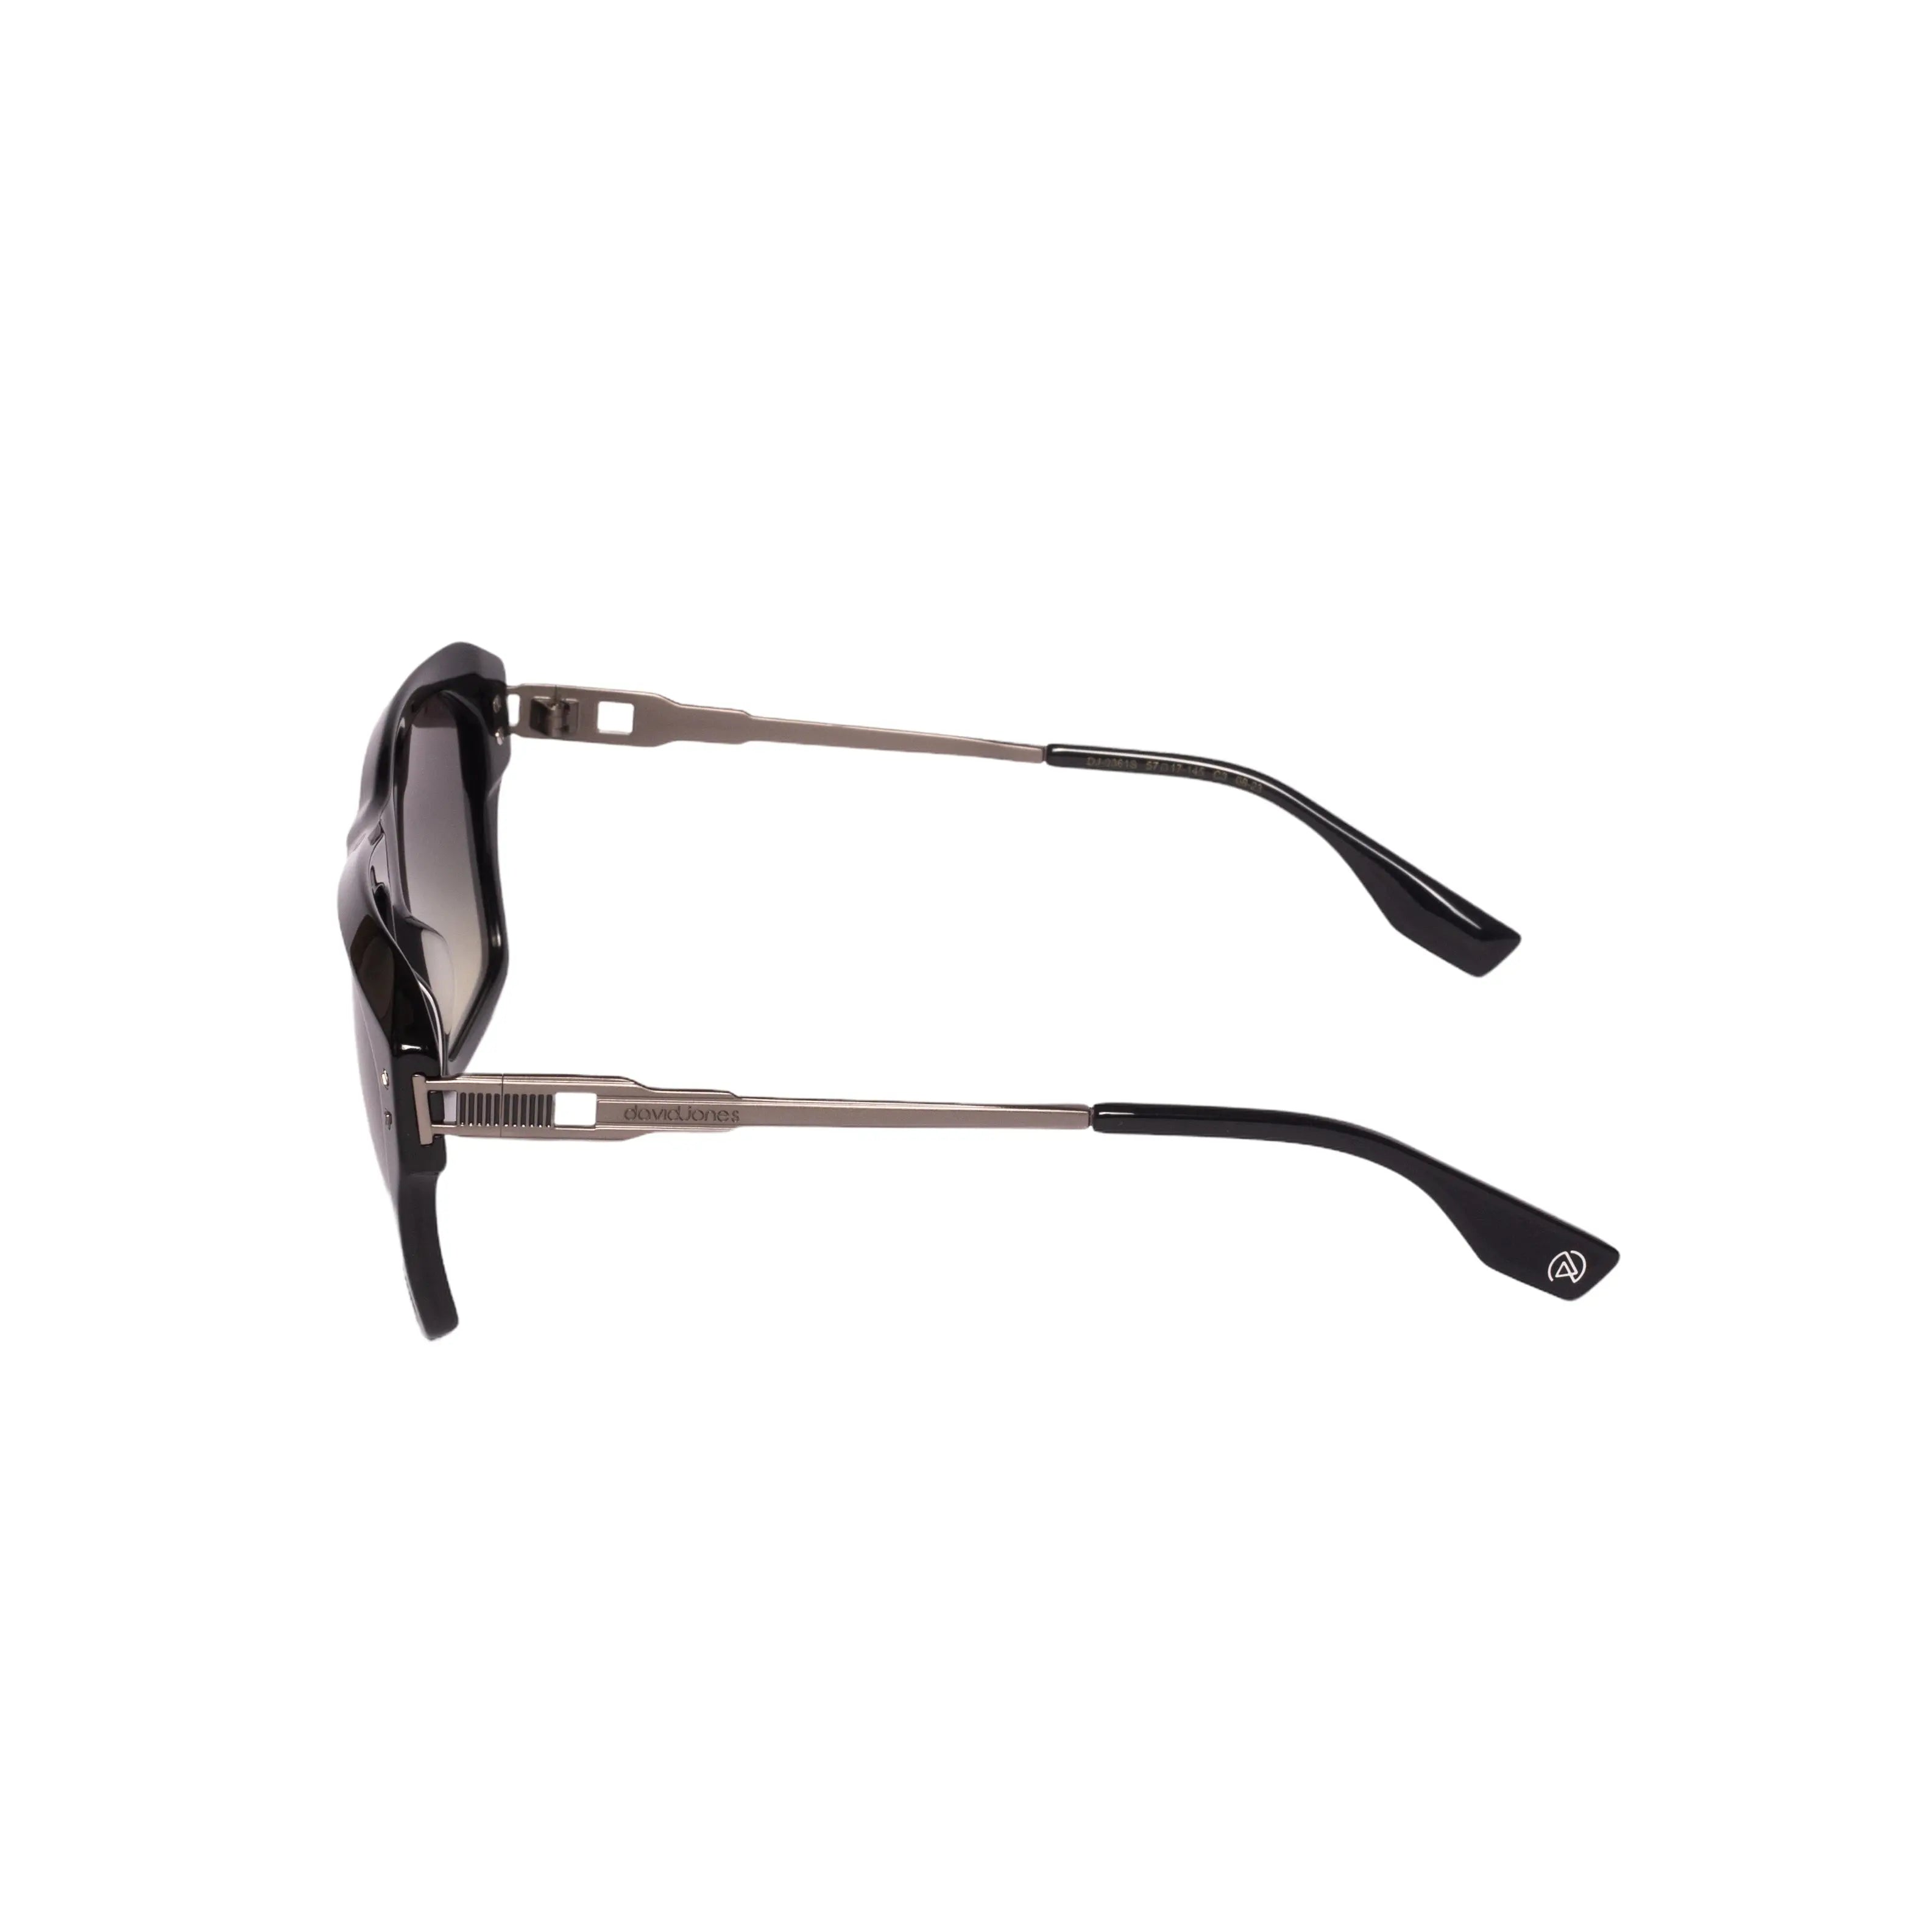 David Jones-DJ 0361-57-C5 Sunglasses - Premium Sunglasses from David Jones - Just Rs. 5490! Shop now at Laxmi Opticians